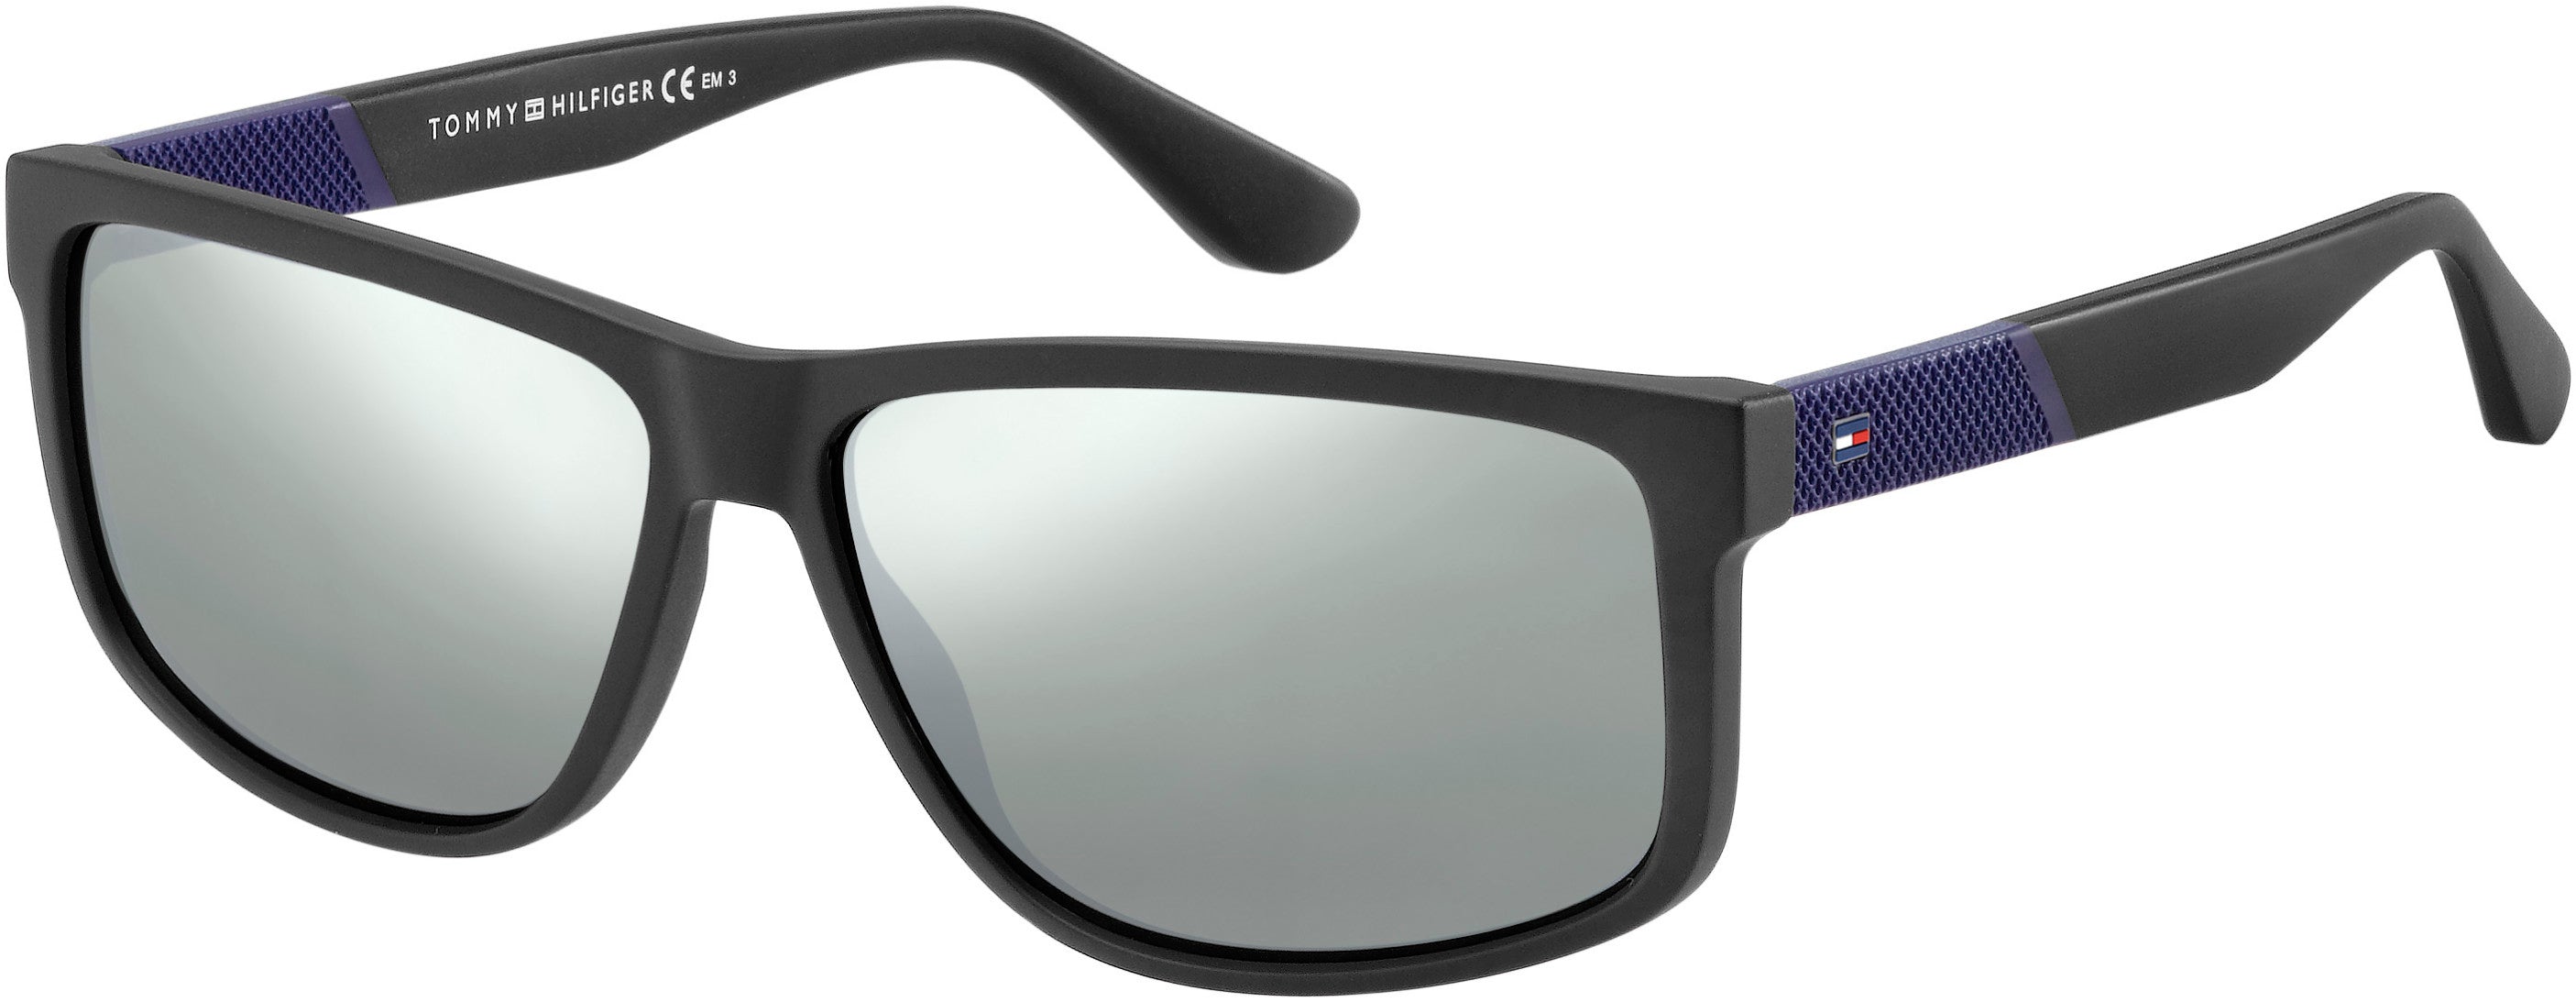 Tommy Hilfiger T. Hilfiger 1560/S Rectangular Sunglasses 0003-0003  Matte Black (T4 Silver Mirror)